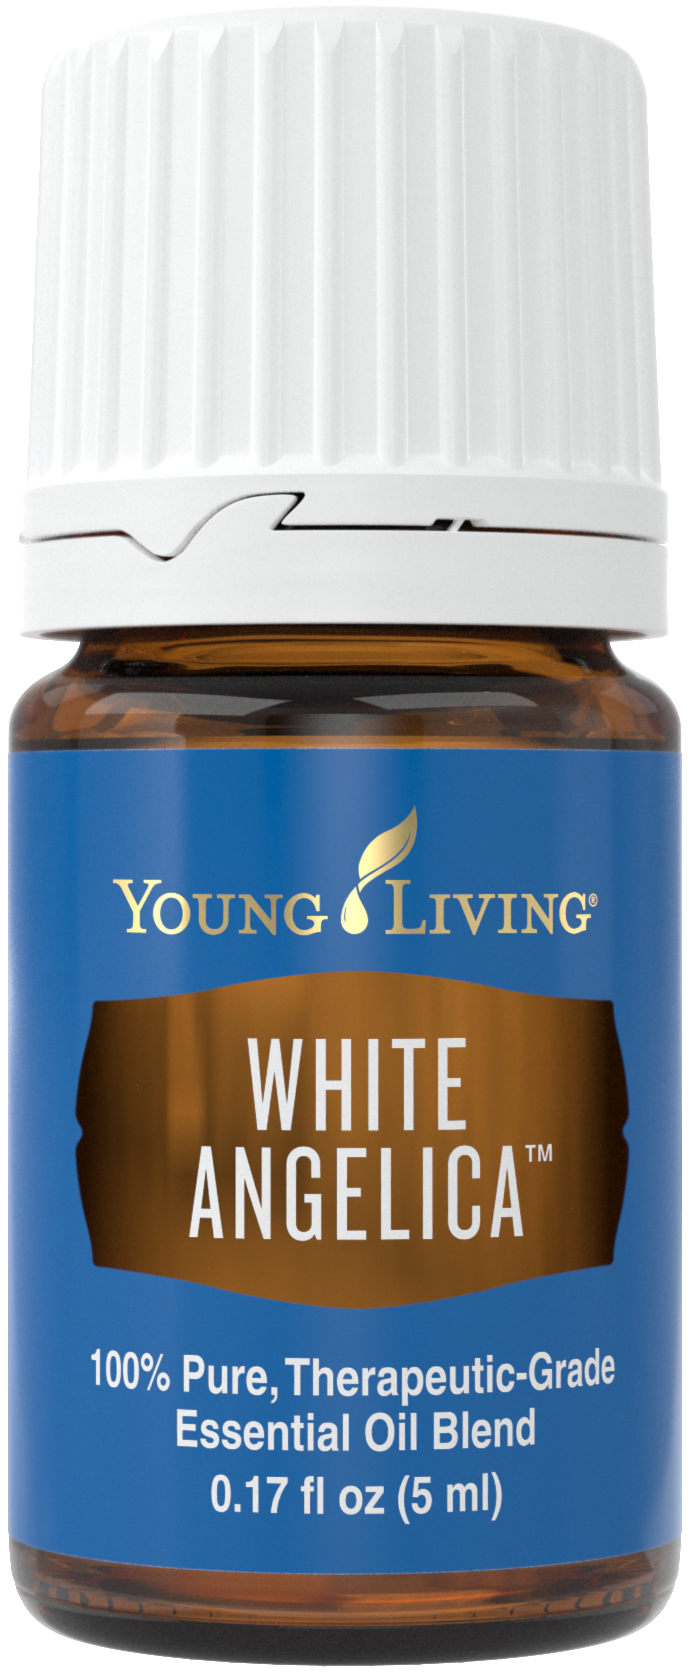 White Angelica 5ml Silo.png